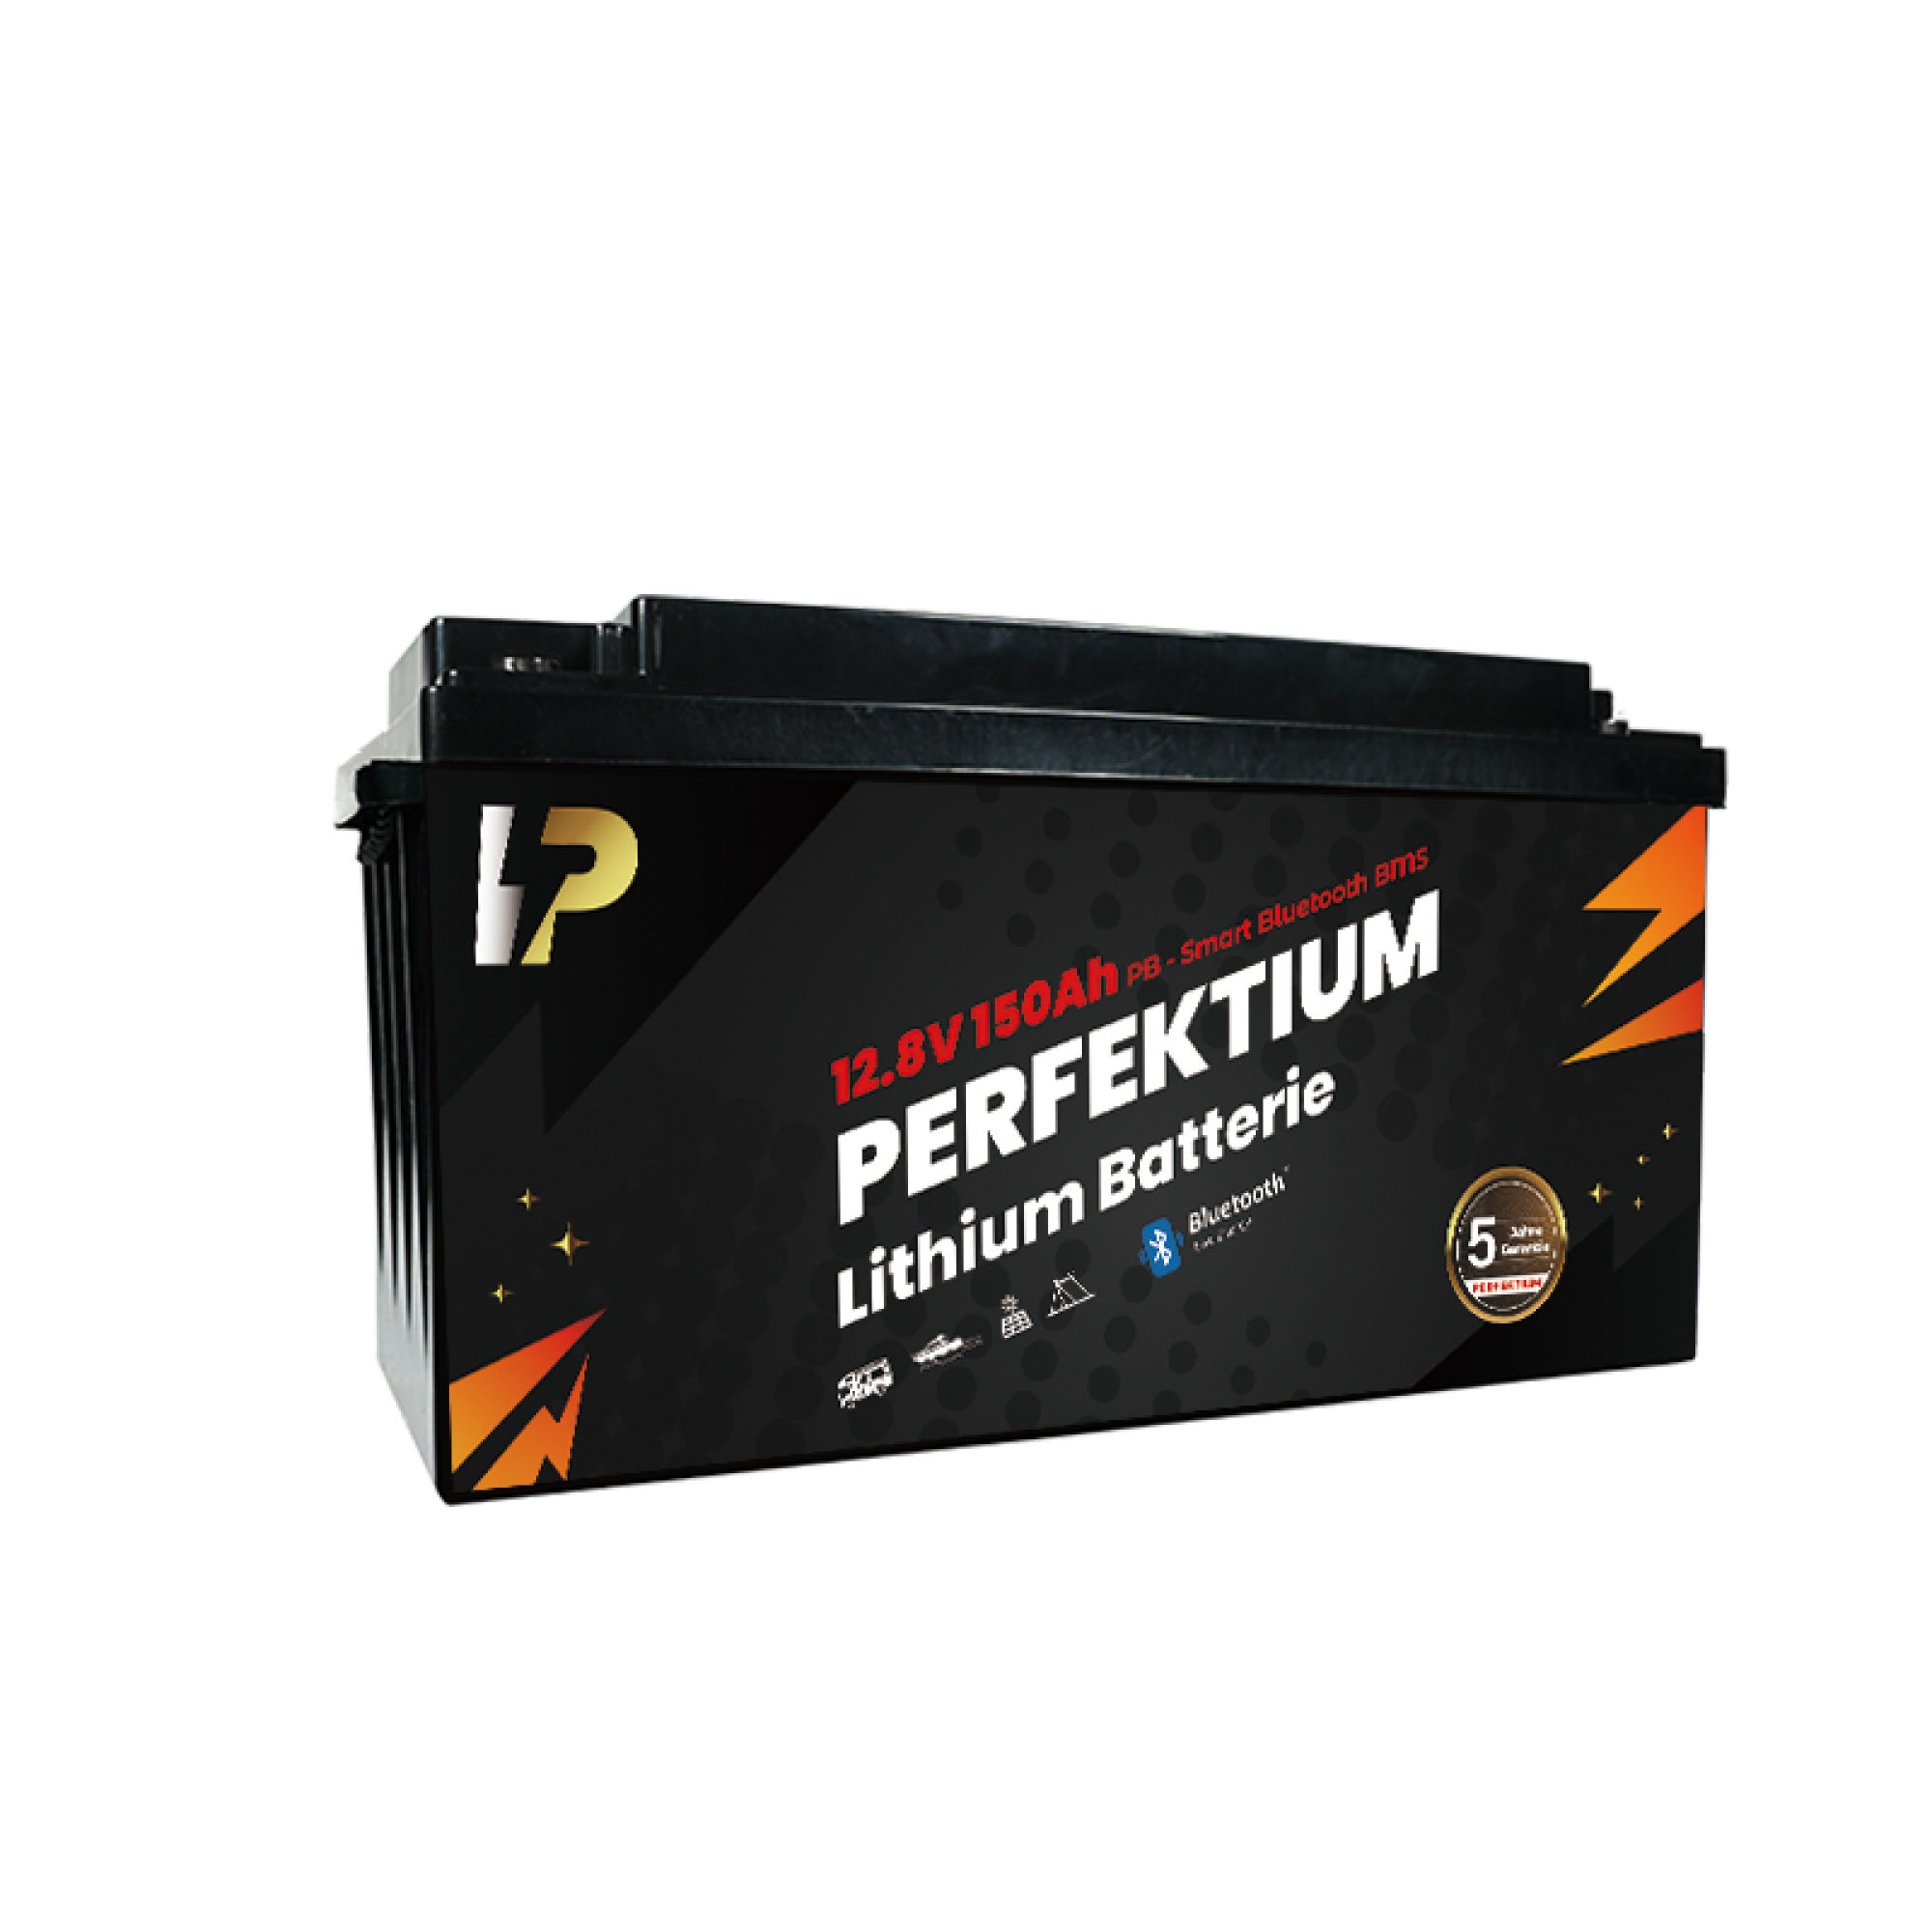 Perfektium LiFePO4 PB-12.8V 150Ah – Lithium Batterie Smart BMS mit Bluetooth – 6 Jahre Garantie